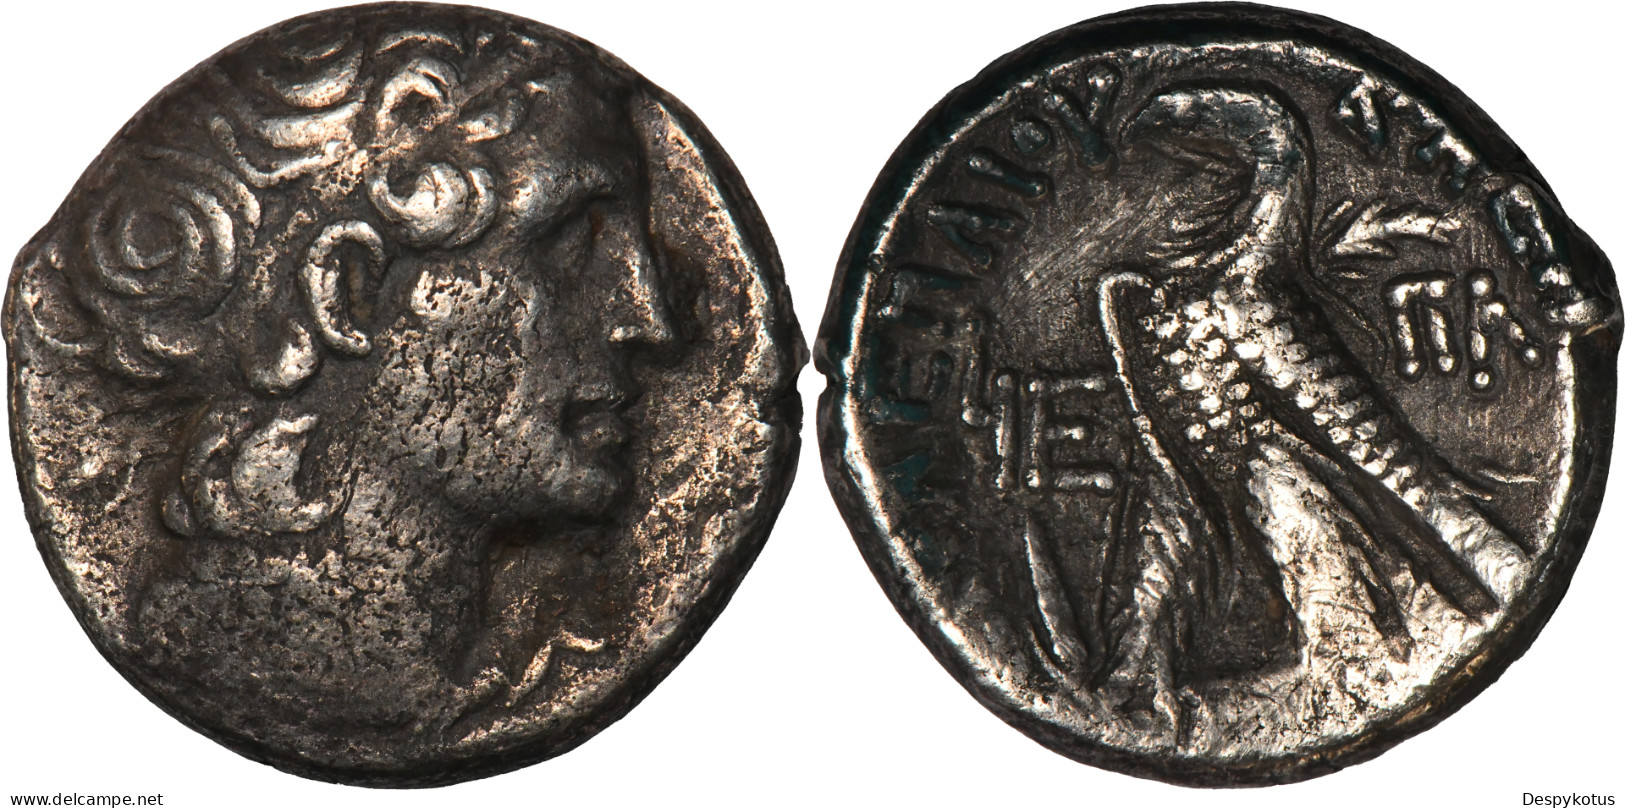 GRECE ANTIQUE - Tetradrachme - EGYPTE, Alexandrie - Cléopatre VII / Ptolémée XV - TRES RARE - 19-270 - Greek